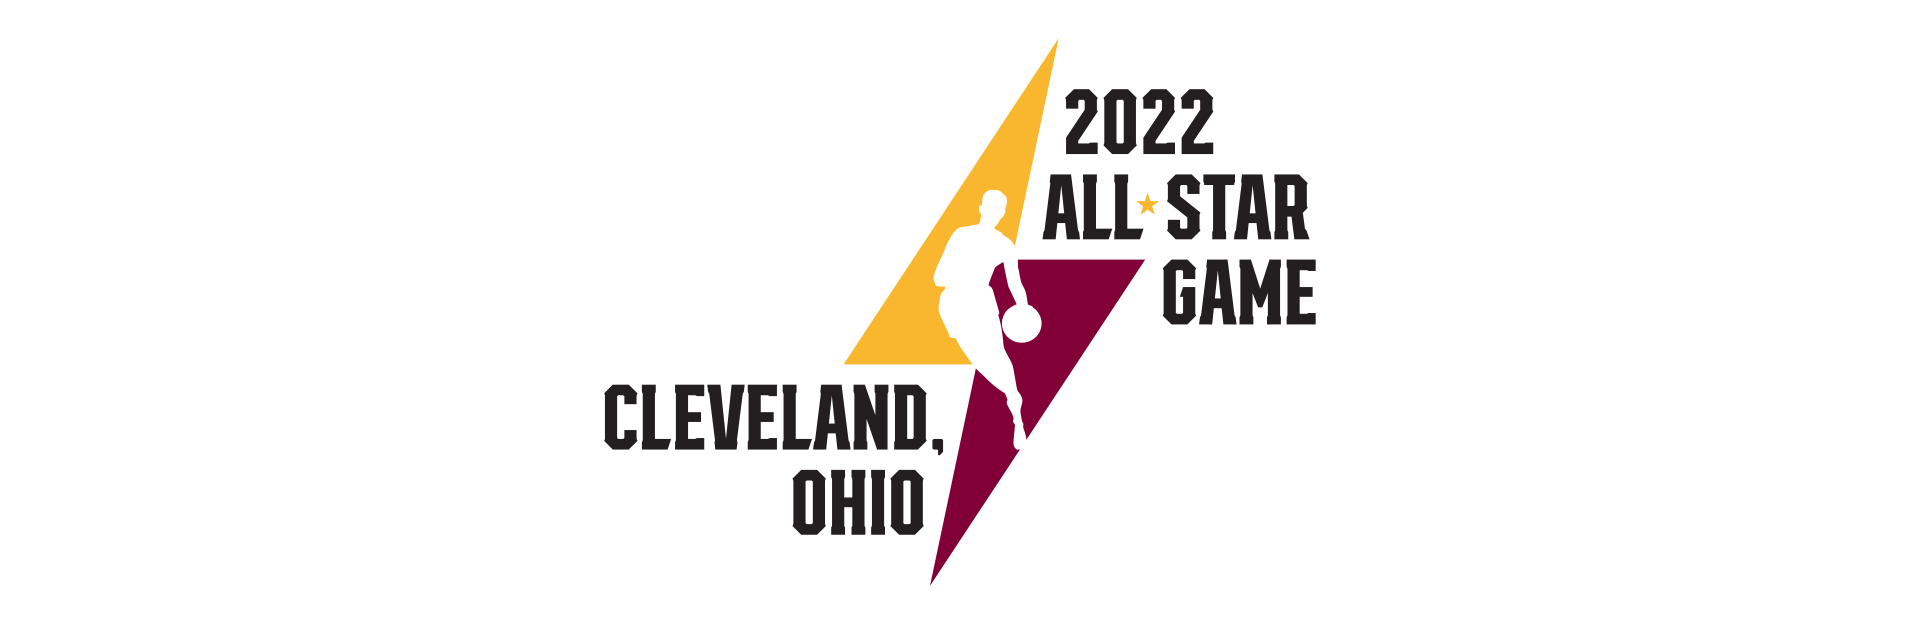 NBA All-Star Game 2022 advertisement graphic design illustration